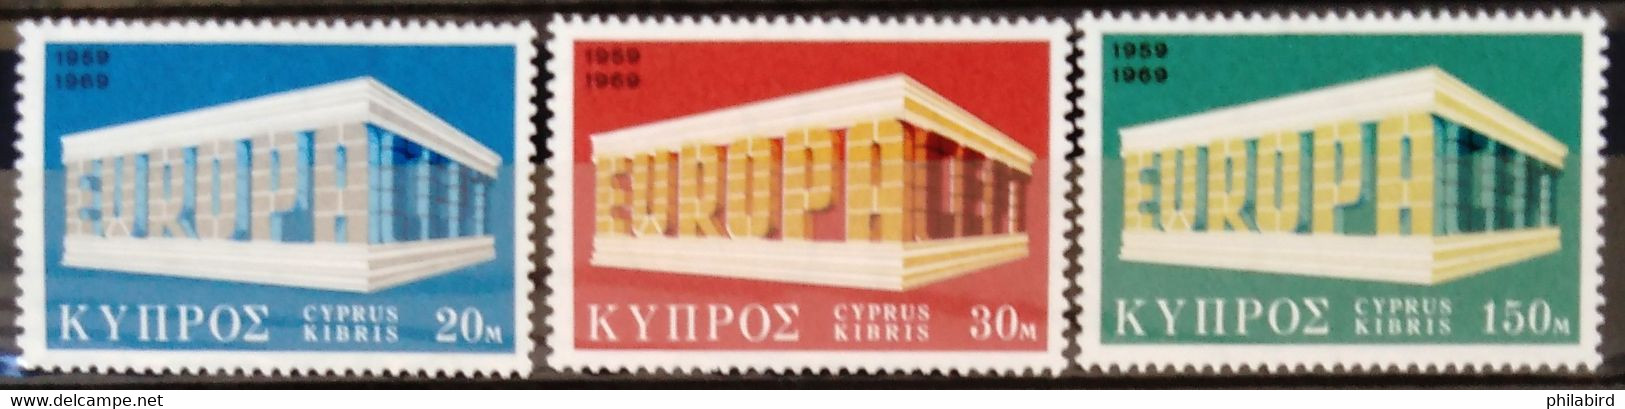 EUROPA 1969 - CHYPRE                  N° 311/313                     NEUF* - 1969